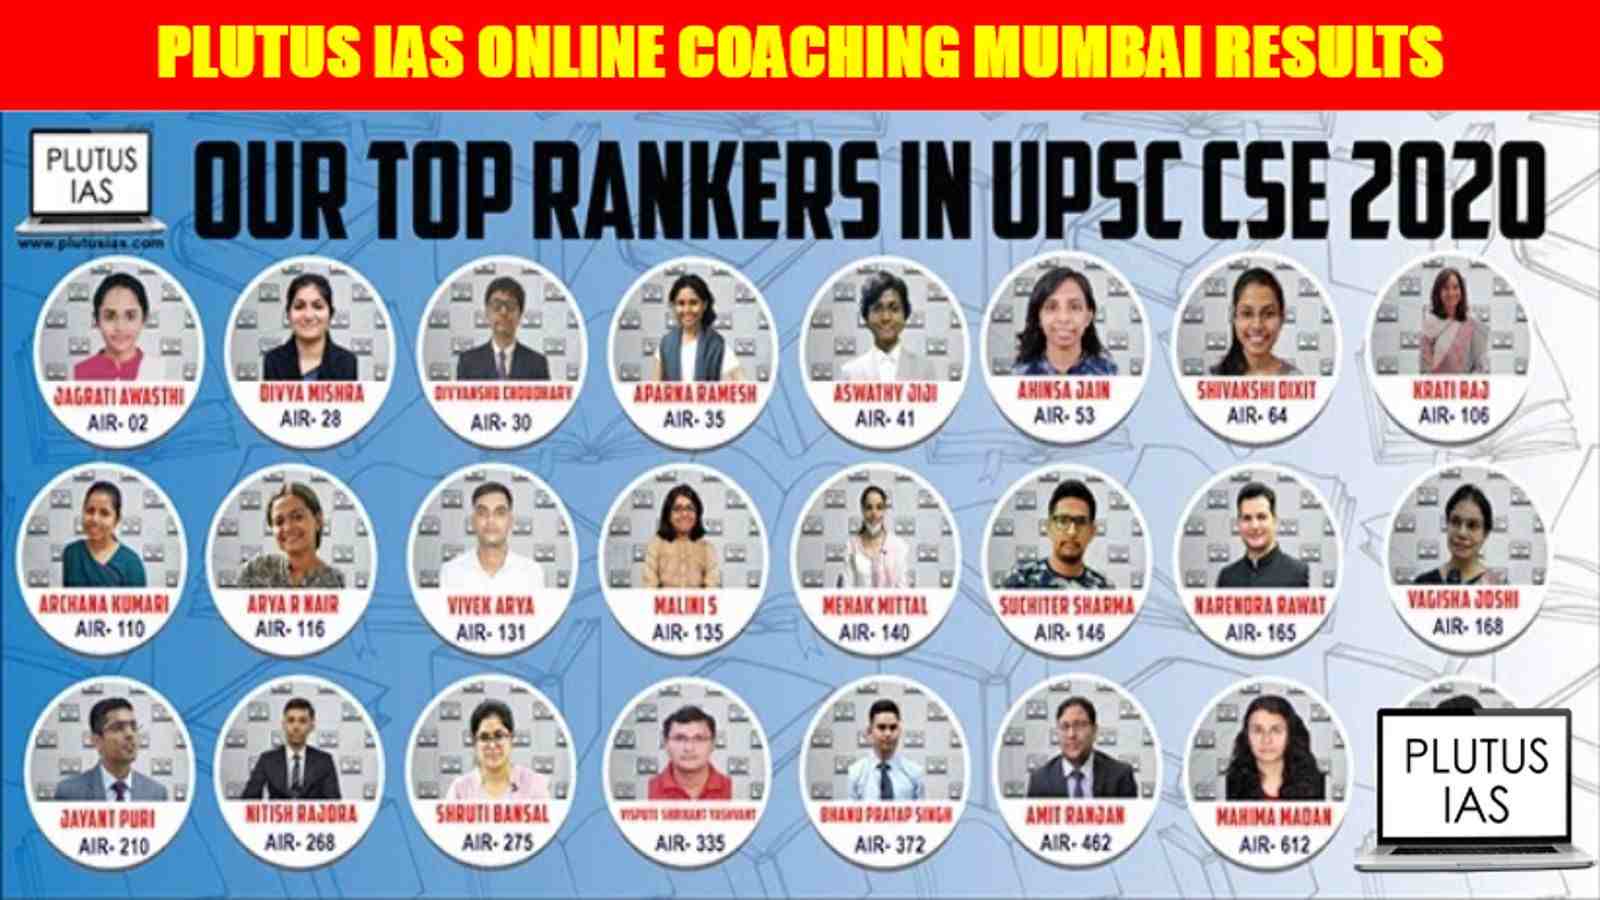 Plutus IAS Online Coaching Mumbai Results